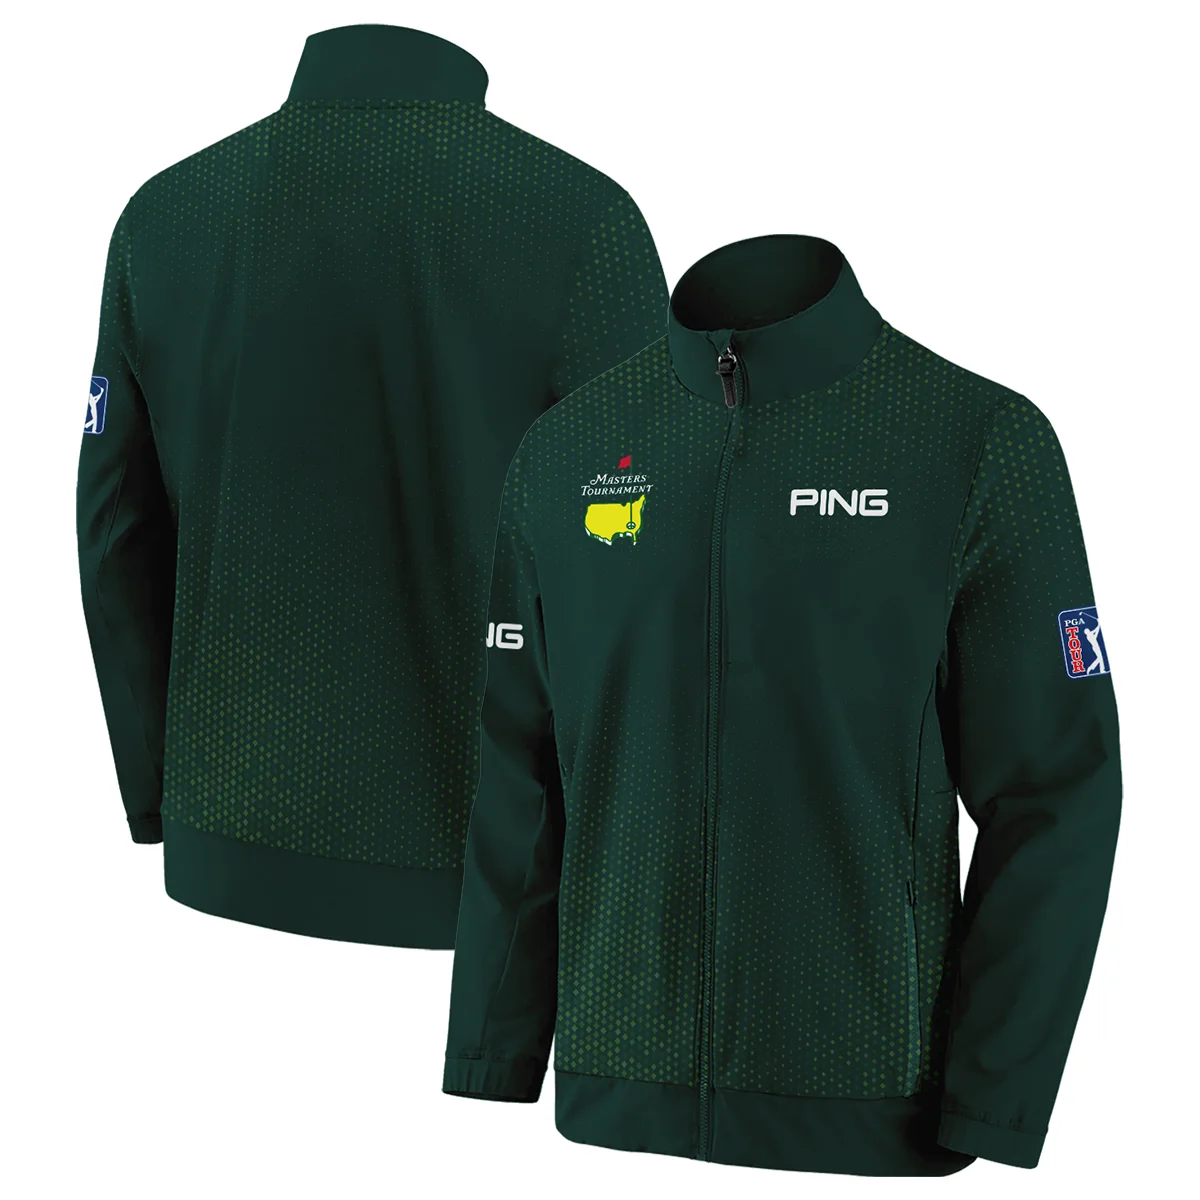 Golf Sport Masters Tournament Ping Stand Colar Jacket Sports Dinamond Shape Dark Green Stand Colar Jacket